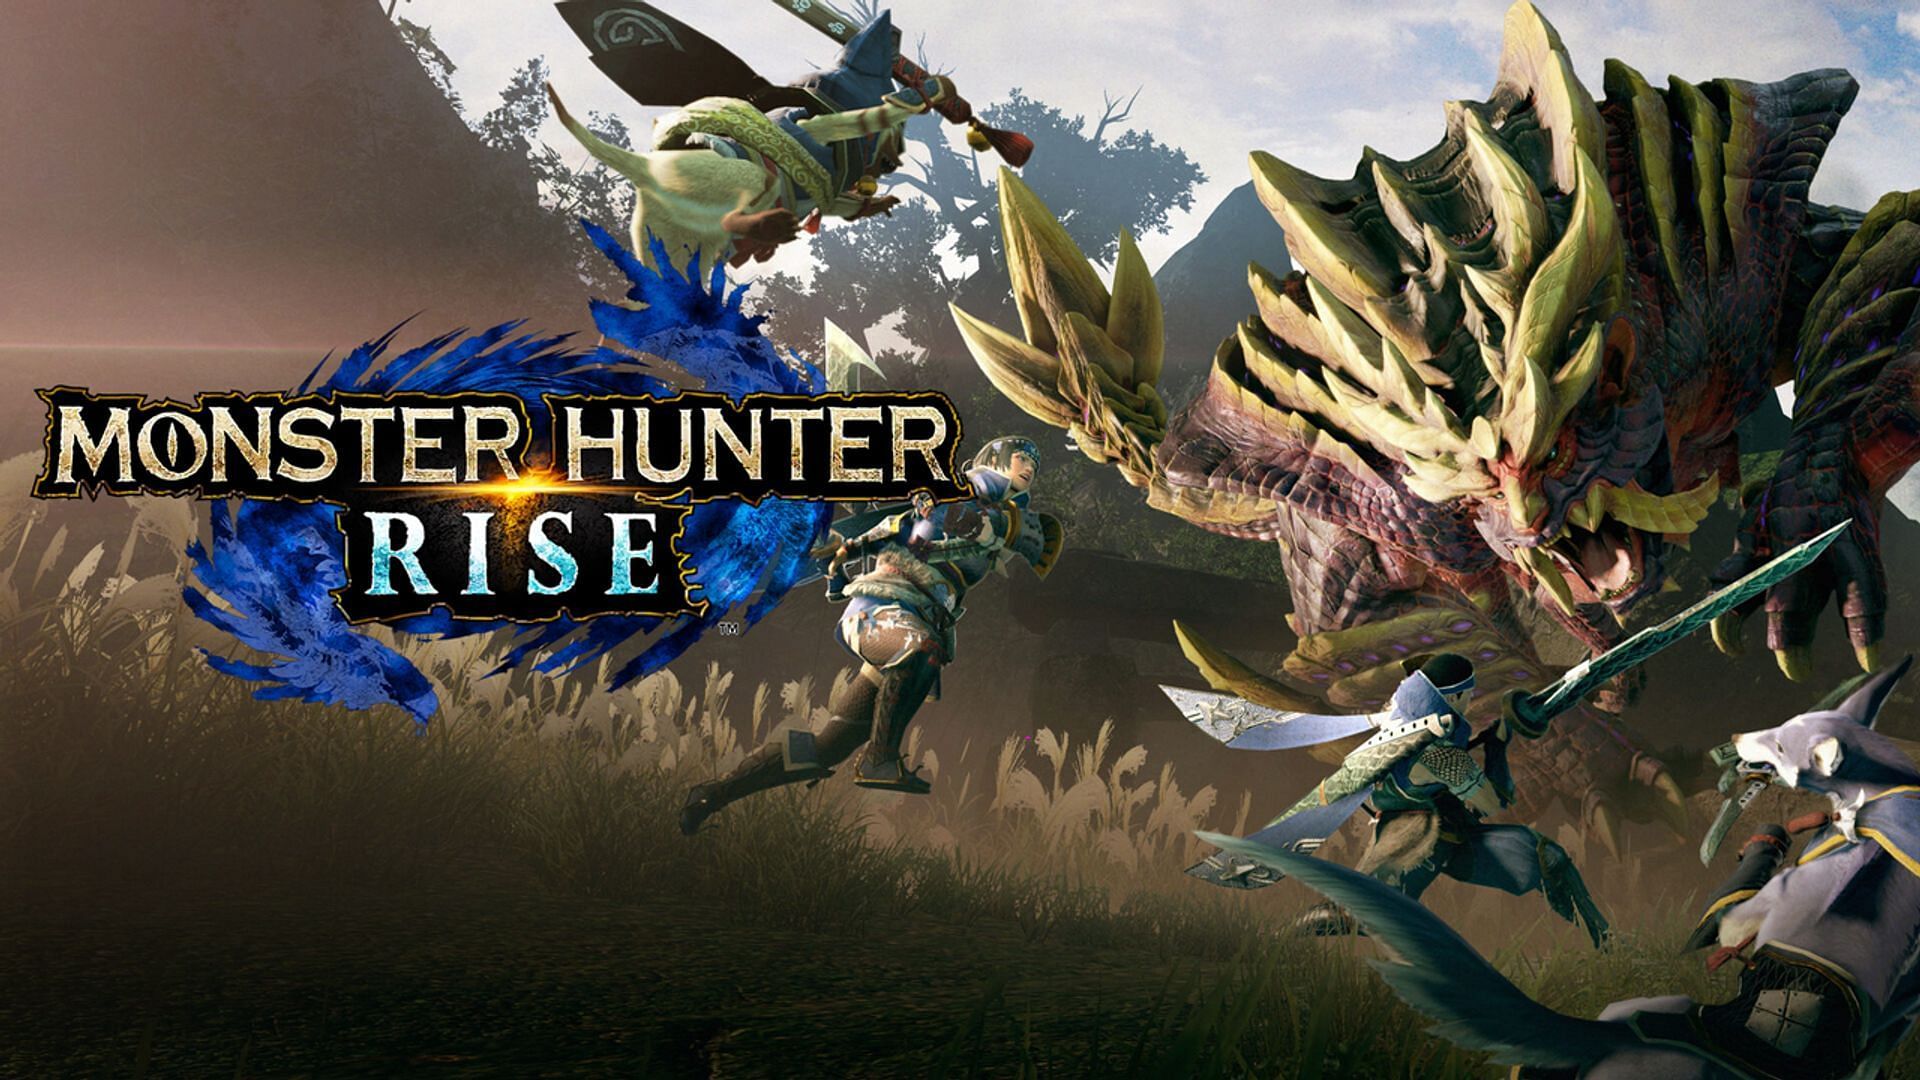 Official artwork for Monster Hunter Rise (Image via Capcom)